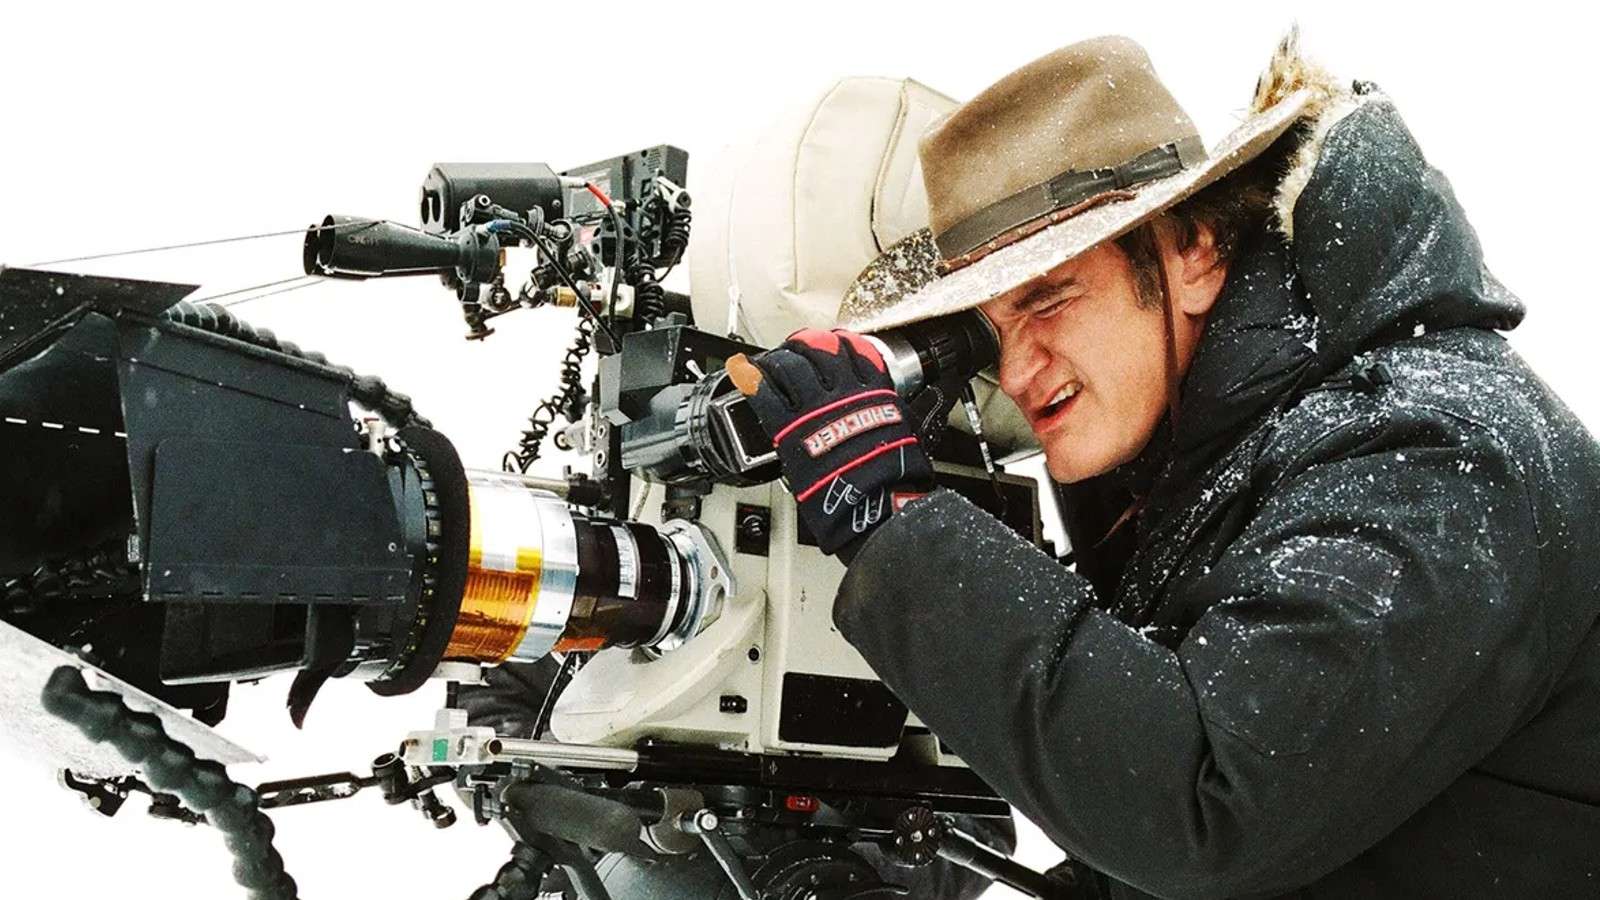 Quentin Tarantino directing The Hateful Eight.